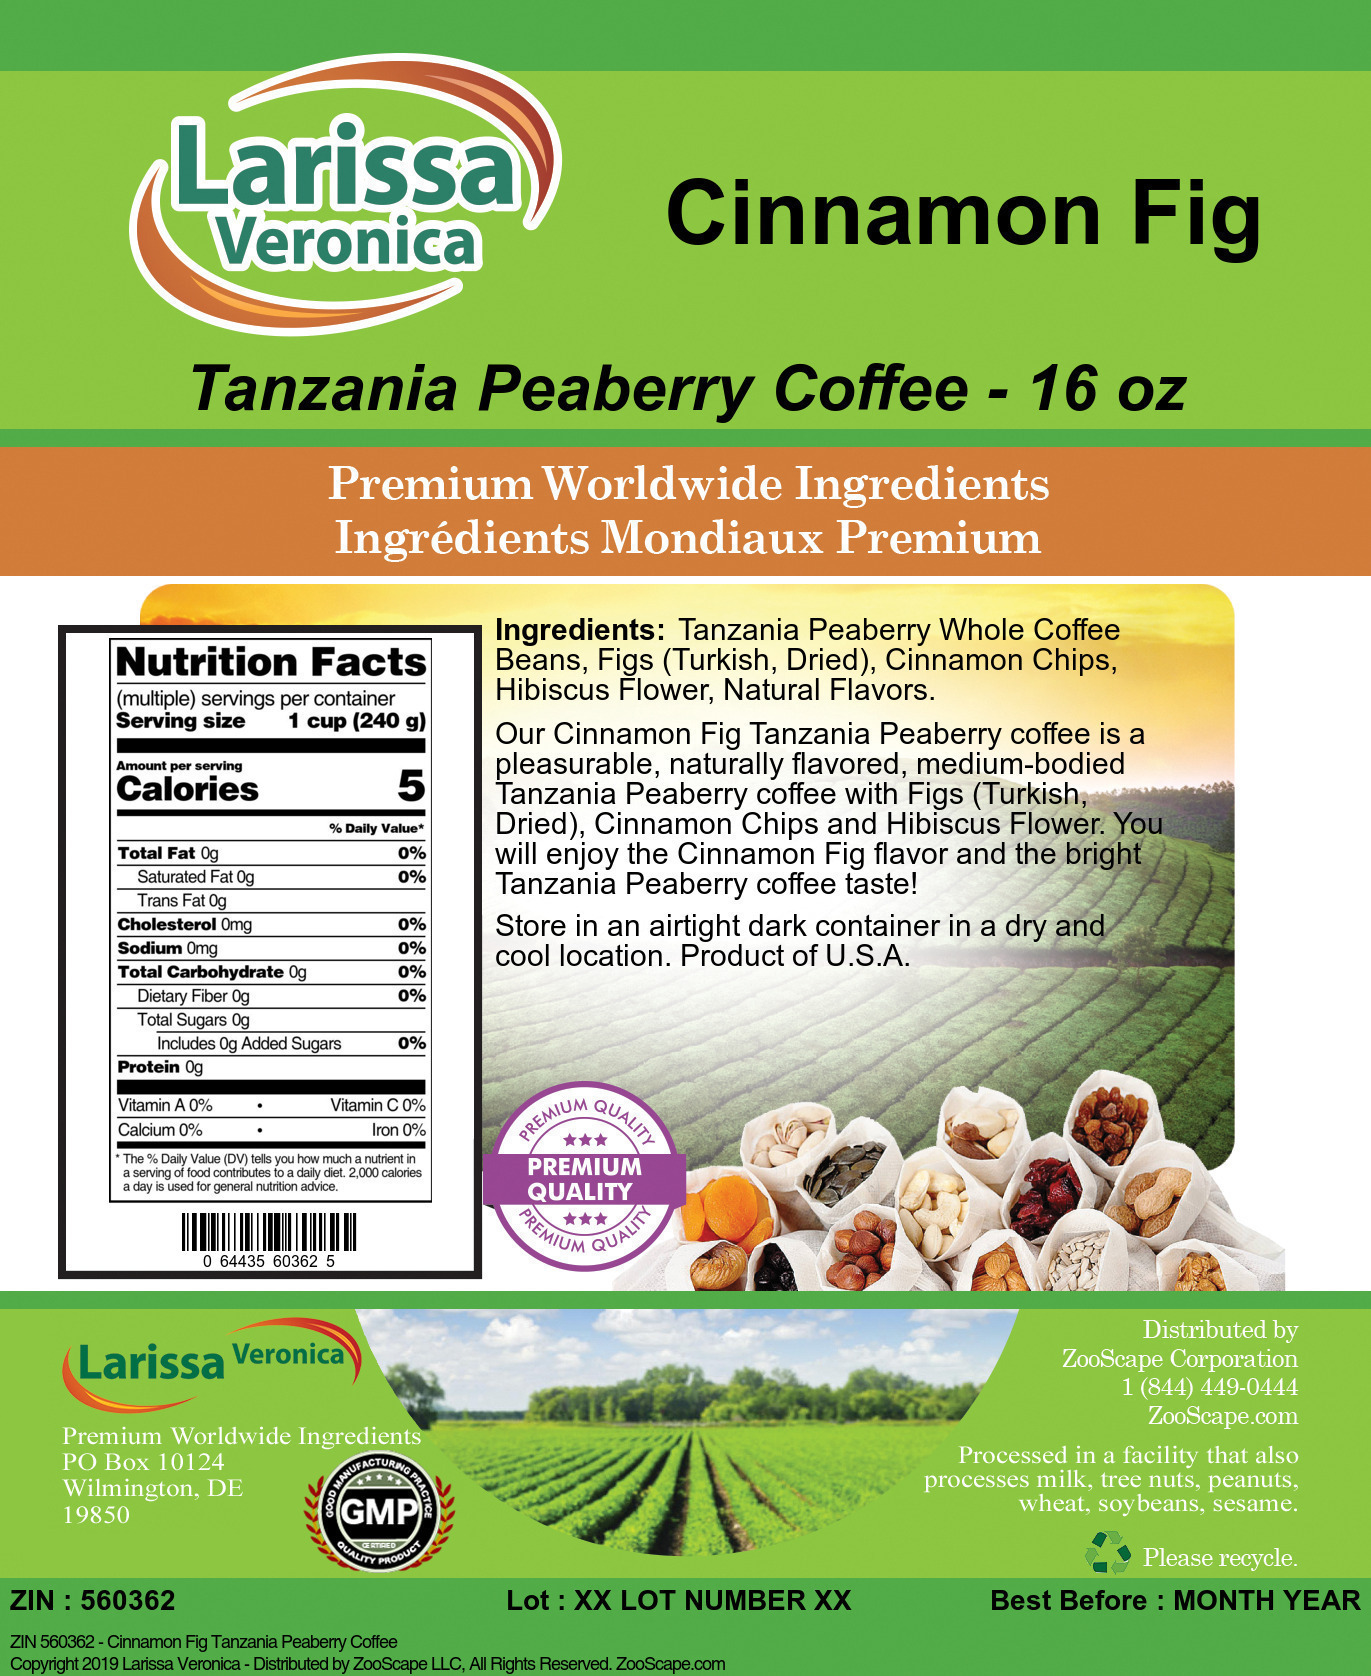 Cinnamon Fig Tanzania Peaberry Coffee - Label